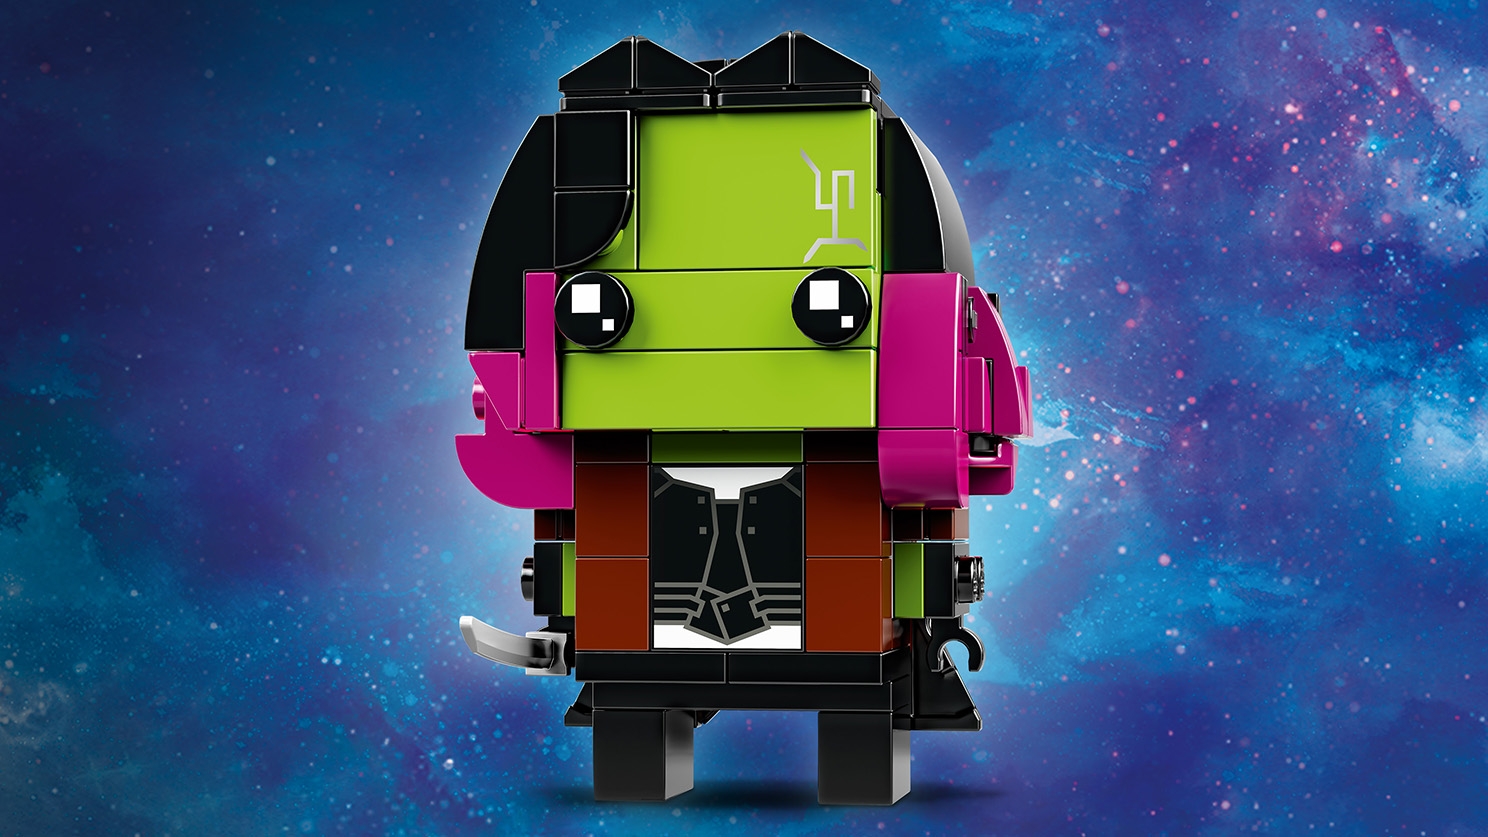 LEGO Brickheadz - 41607 Gamora - Build a LEGO Brickheadz figure of Gamora from the Avengers: Infinity War movie. Check out her green skin, dark pink hair and gun.